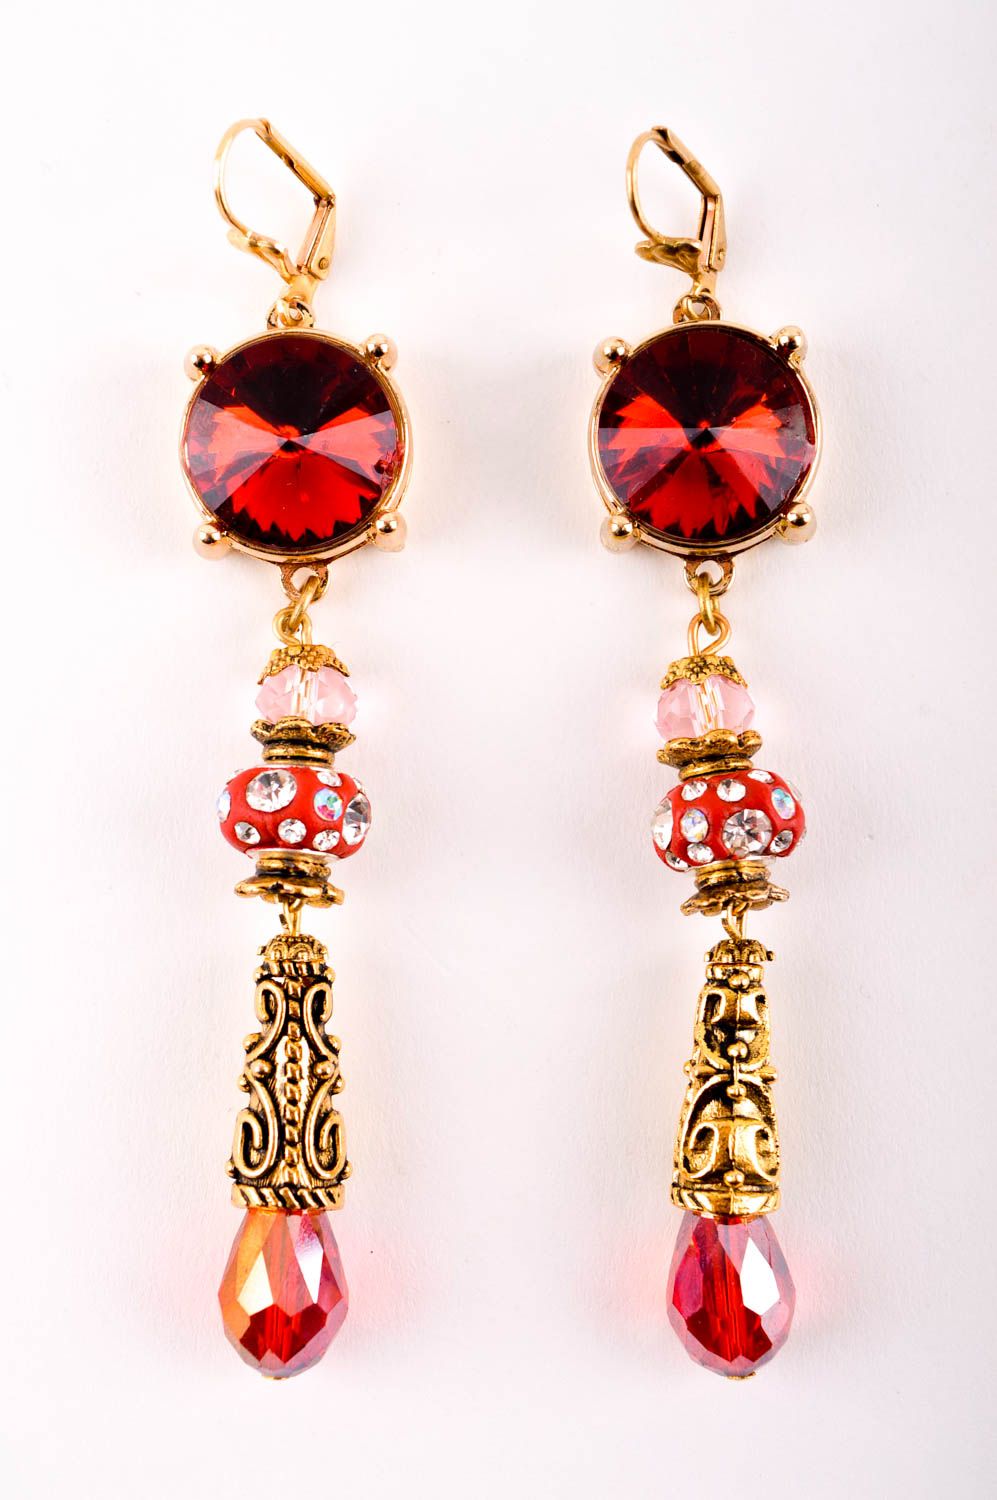 Handmade earrings designer earrings with charms unusual gift for girls photo 3